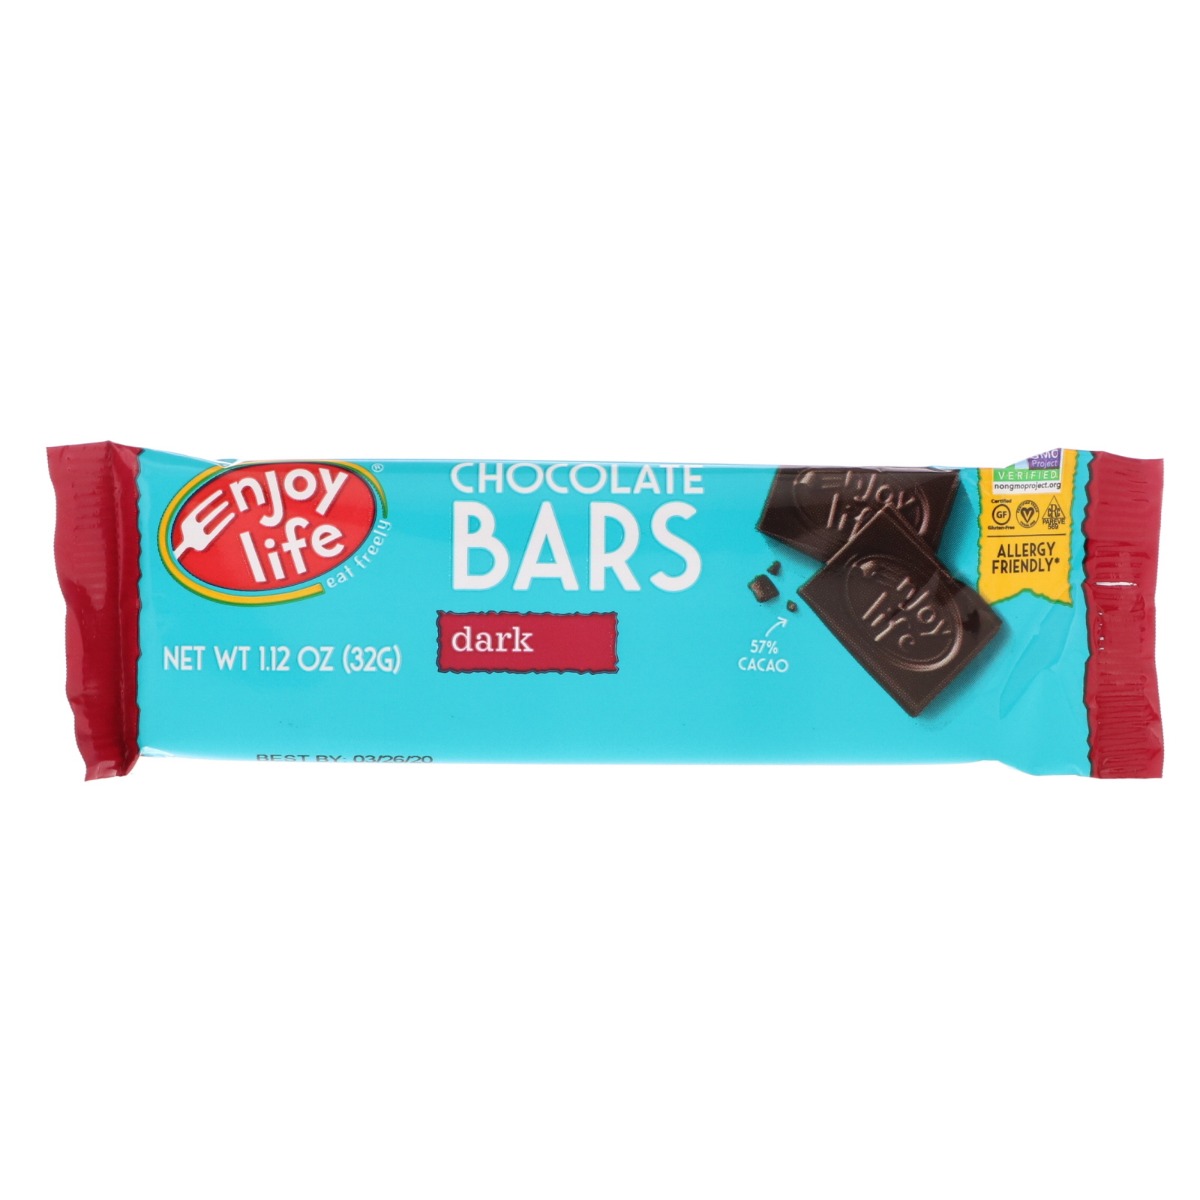 Enjoy Life - Chocolate Bar - Boom Choco Boom - Dark Chocolate - Dairy Free - 1.12 Oz - Case Of 24 - 853522000726